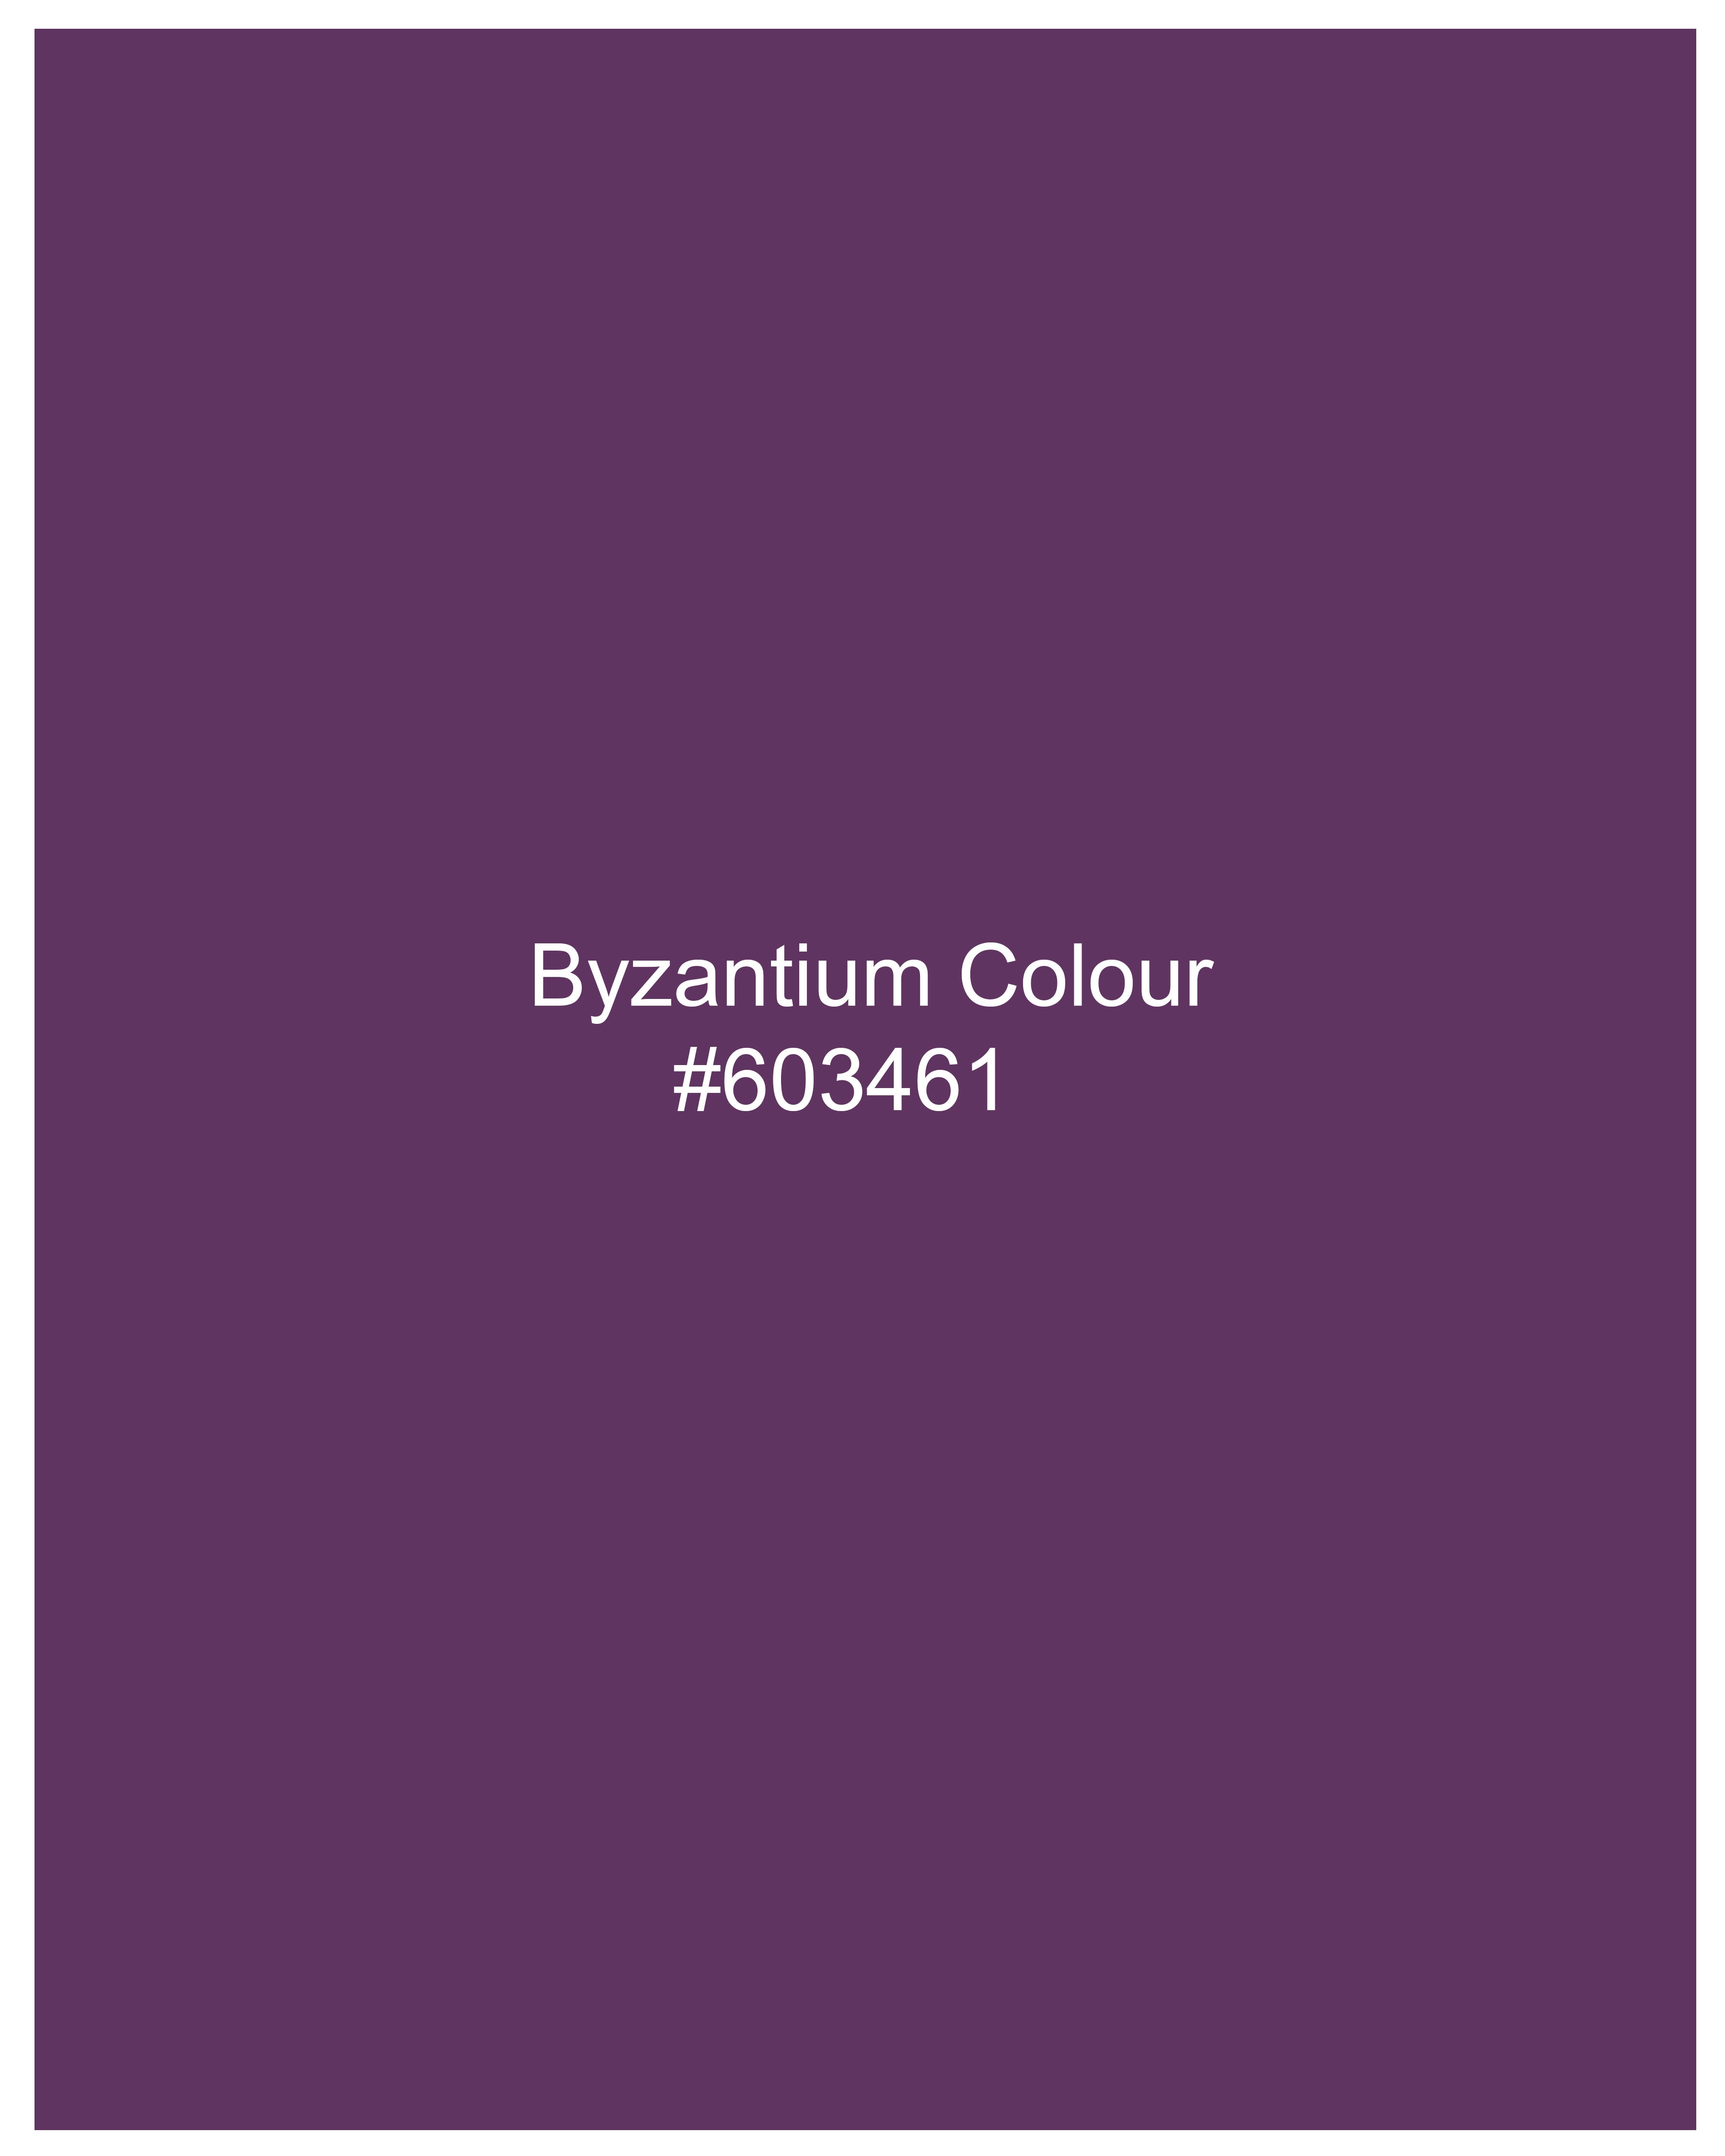 Byzantium Purple Jacquard Textured Premium Giza Cotton Shirt 9646-BLE-38,9646-BLE-H-38,9646-BLE-39,9646-BLE-H-39,9646-BLE-40,9646-BLE-H-40,9646-BLE-42,9646-BLE-H-42,9646-BLE-44,9646-BLE-H-44,9646-BLE-46,9646-BLE-H-46,9646-BLE-48,9646-BLE-H-48,9646-BLE-50,9646-BLE-H-50,9646-BLE-52,9646-BLE-H-52